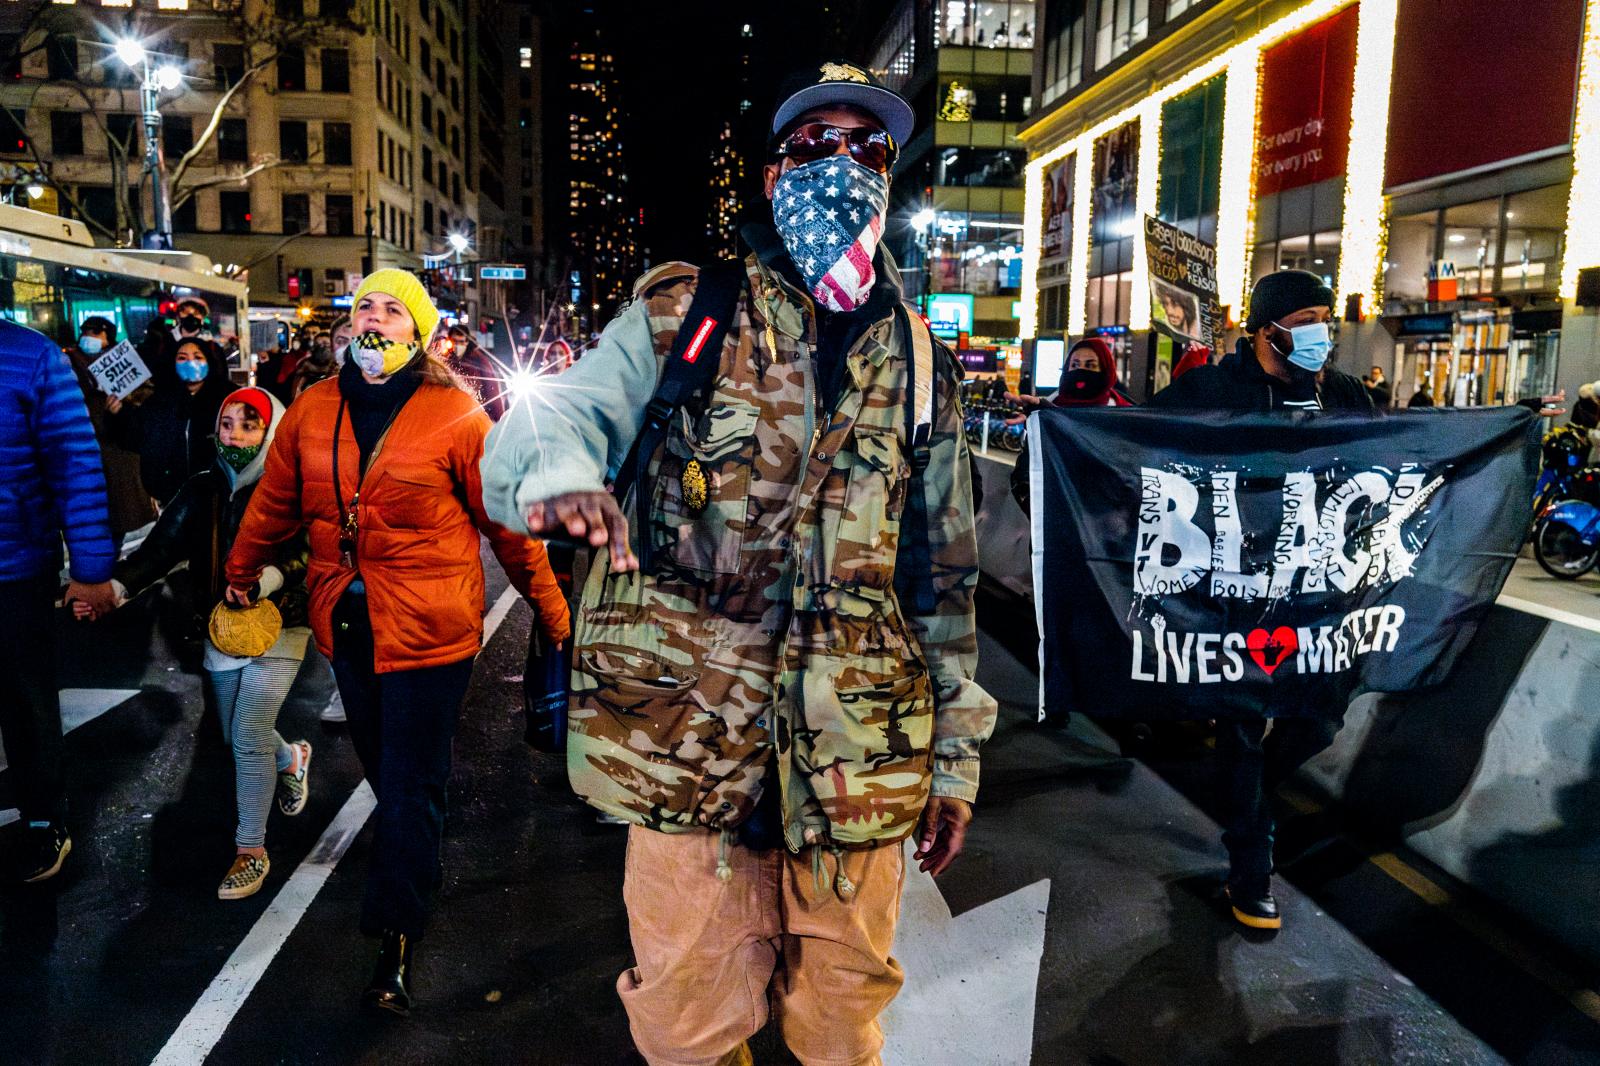 Image from Black Lives Matter -  December 10, 2020  Greeley Square/32nd Street, Manhattan...